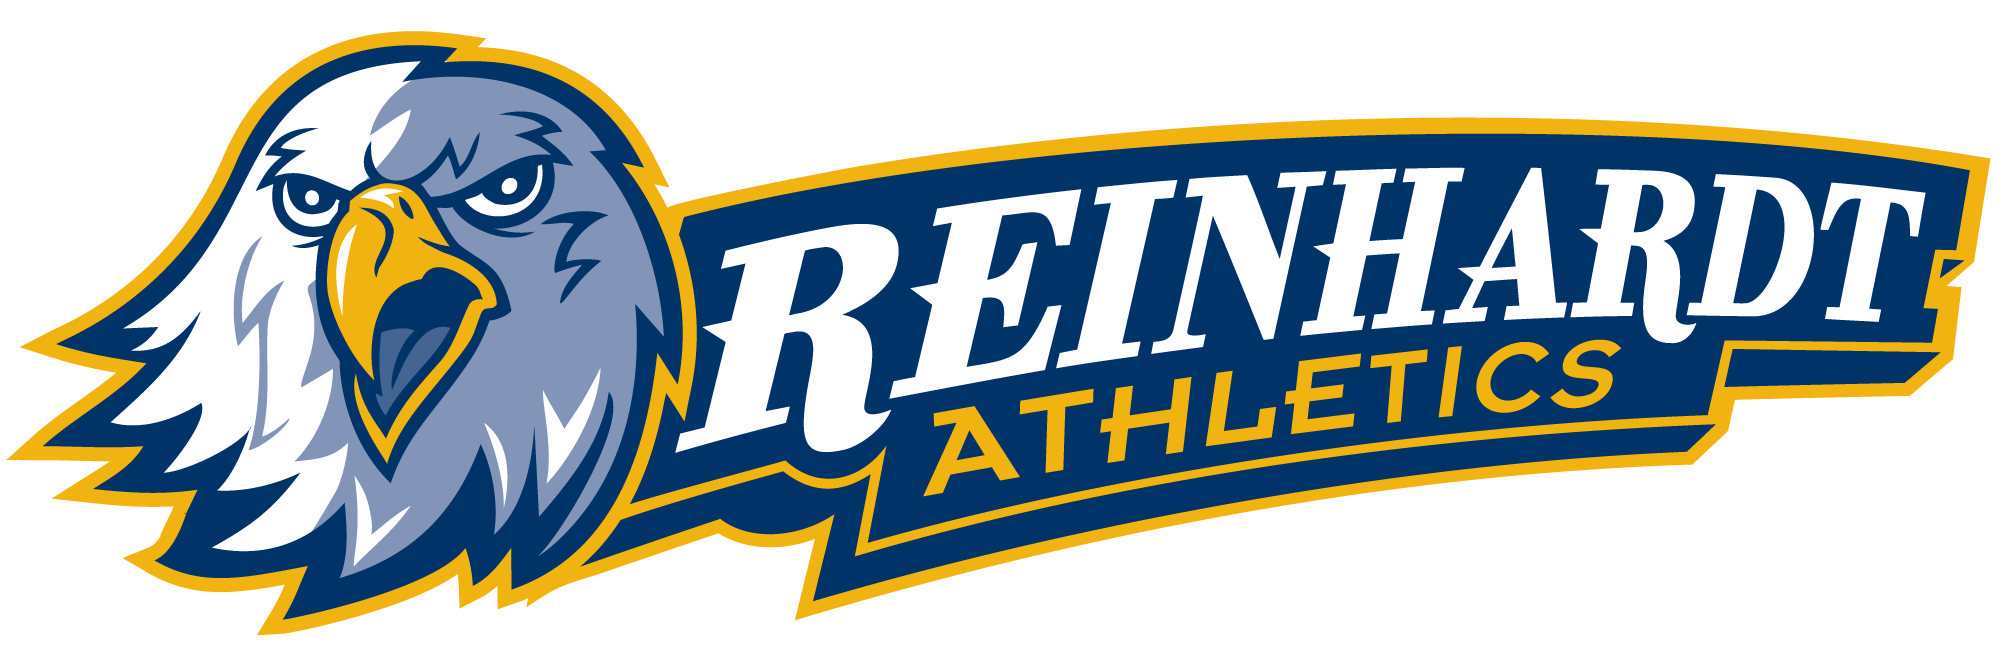 Reinhart Logo - Reinhardt University